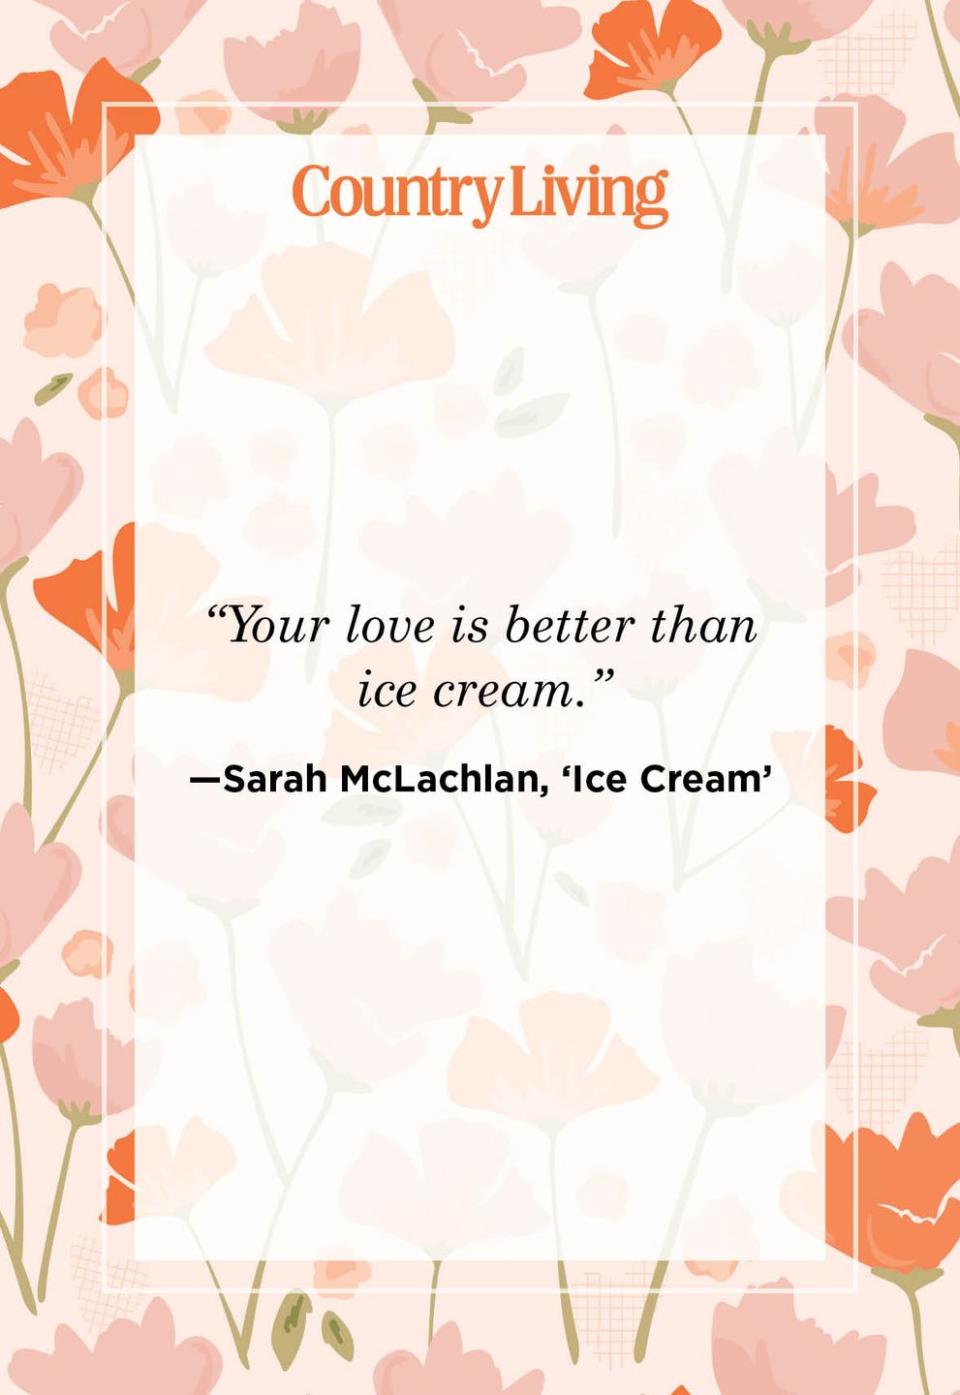 5) Sarah McLachlan, 'Ice Cream'